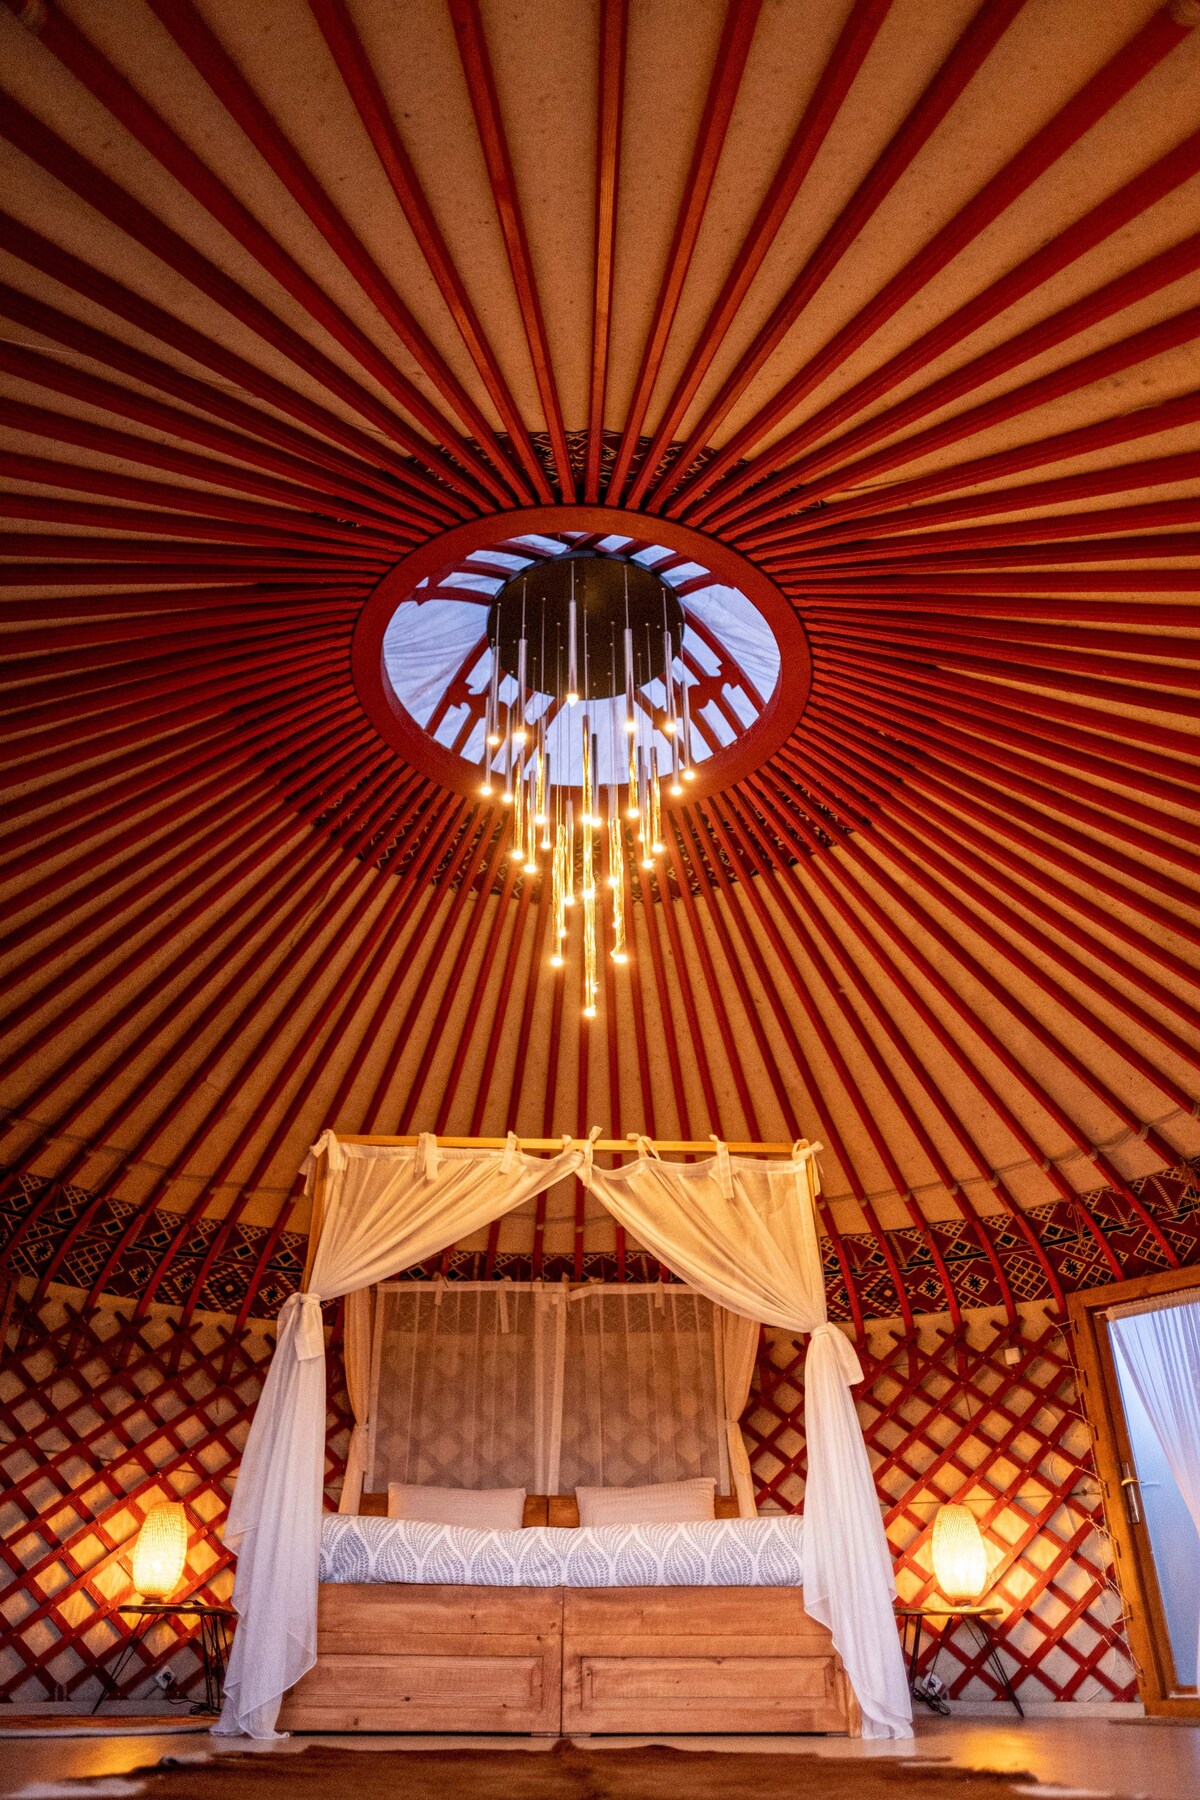 Elegant Yurt in Stunning Nature w/King Size Bed